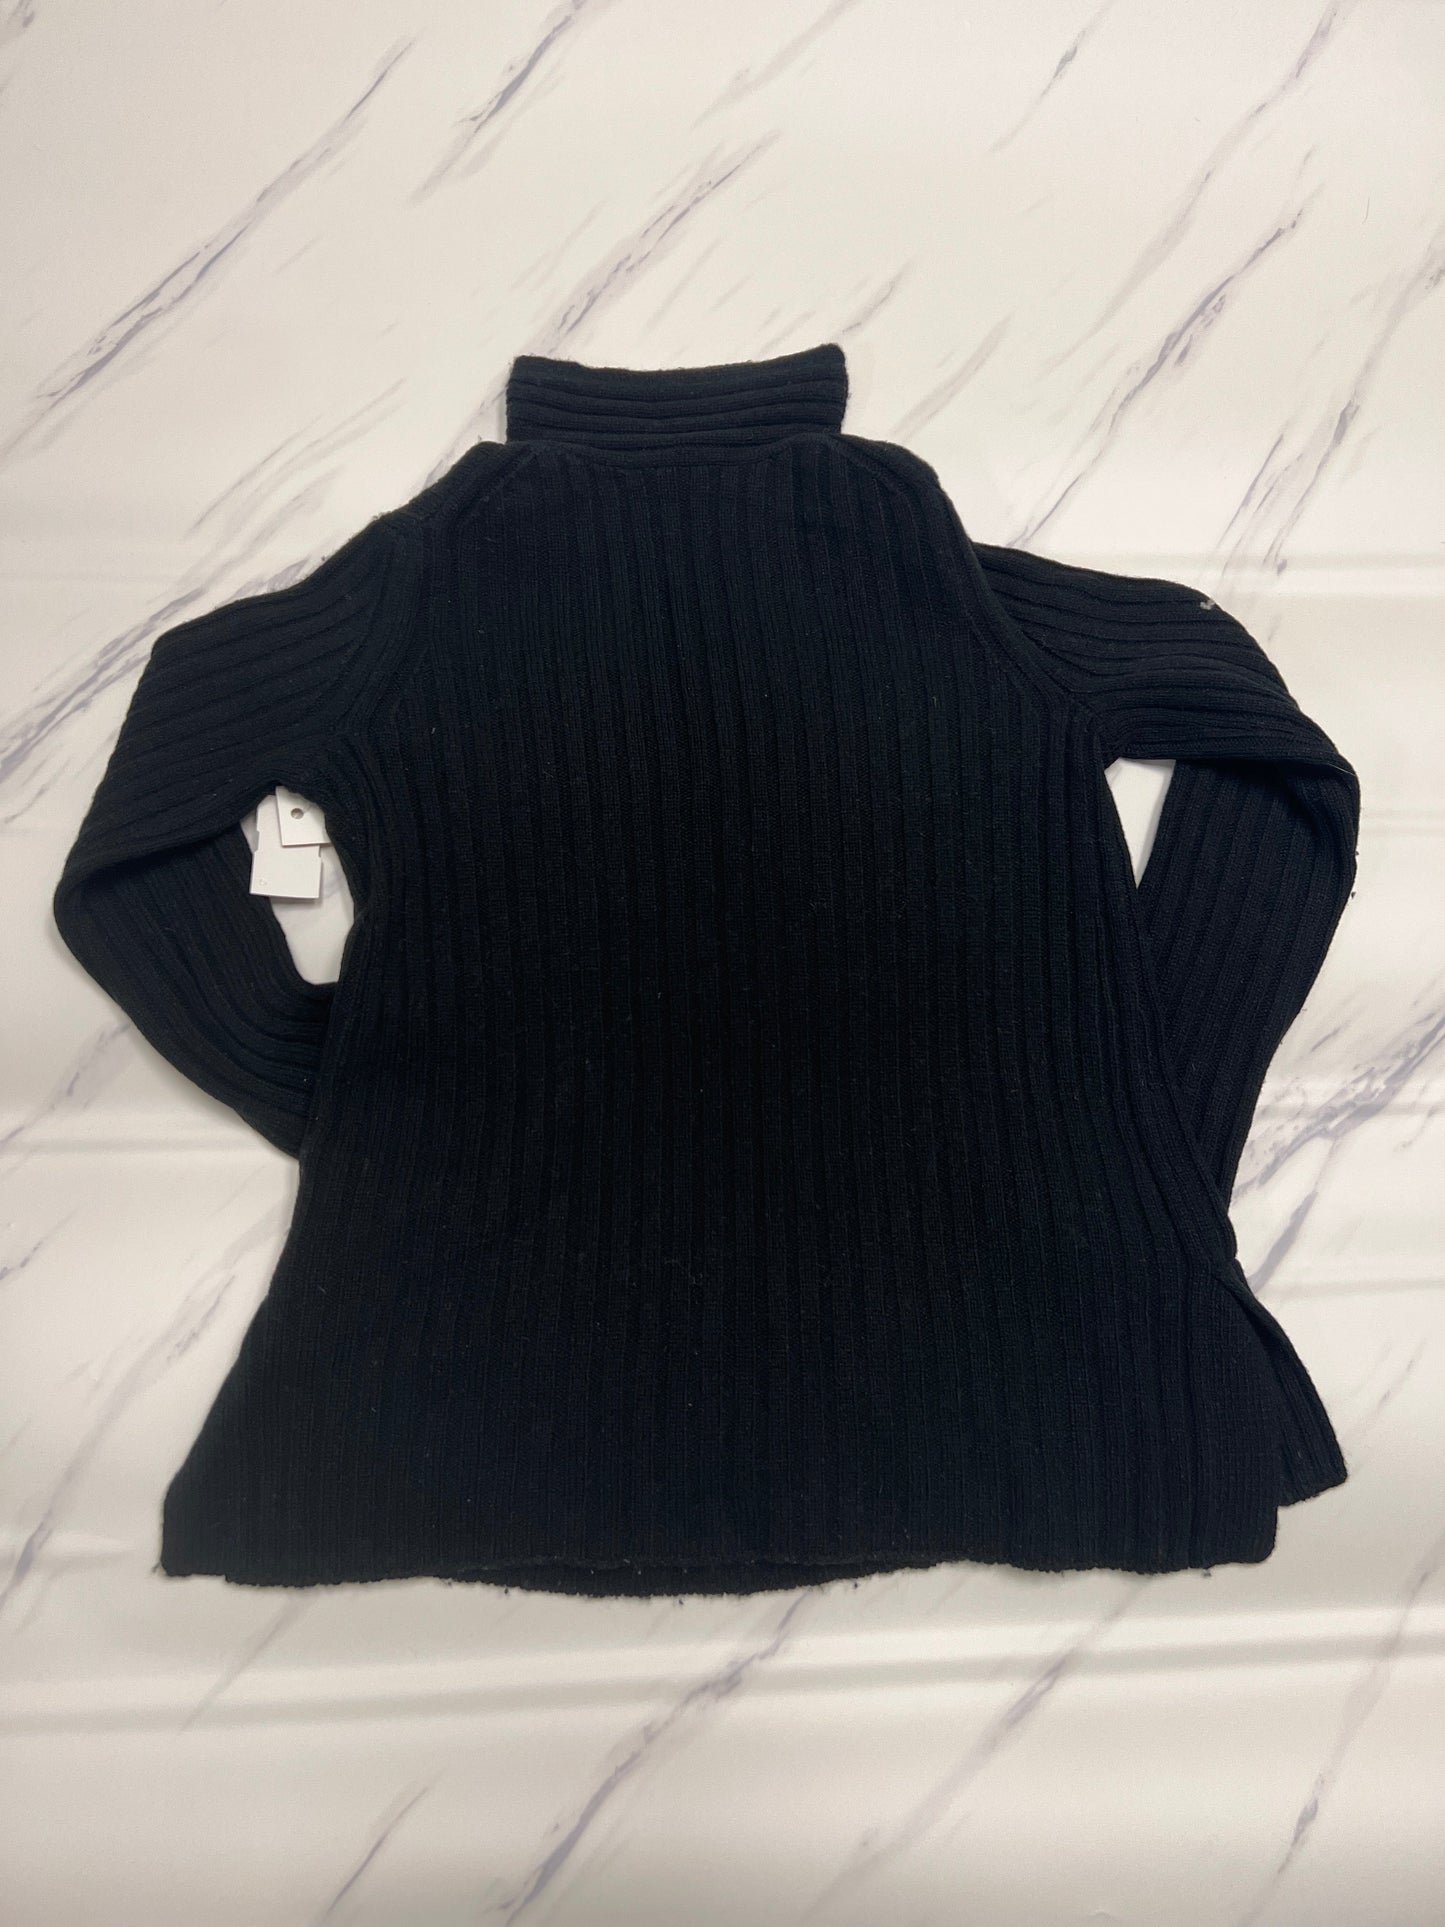 Sweater By Vince  Size: Xxs